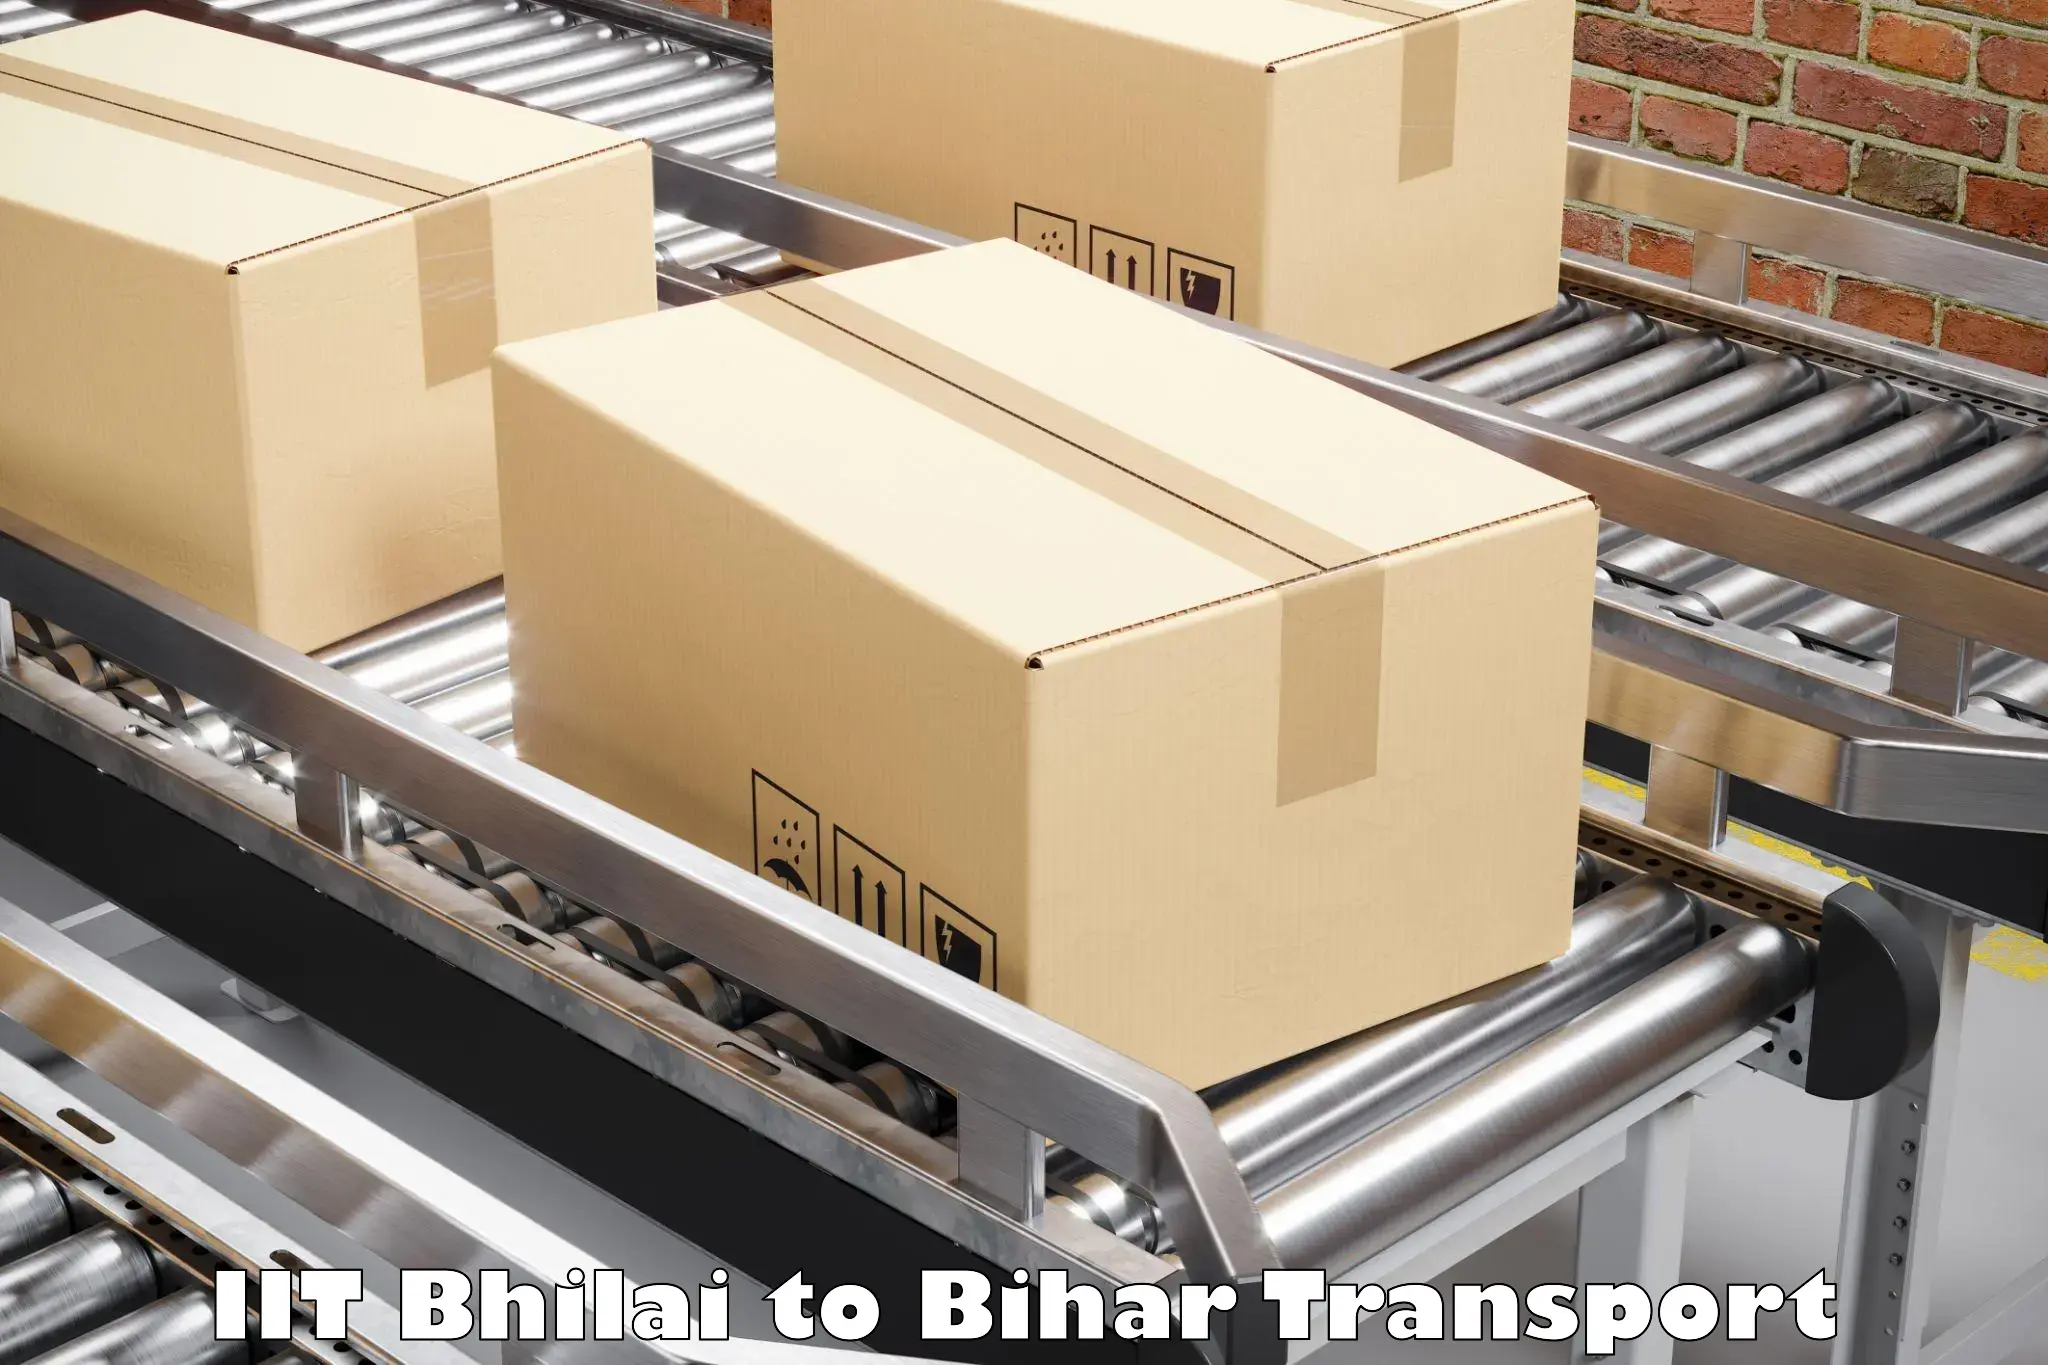 Nearest transport service IIT Bhilai to Bihta